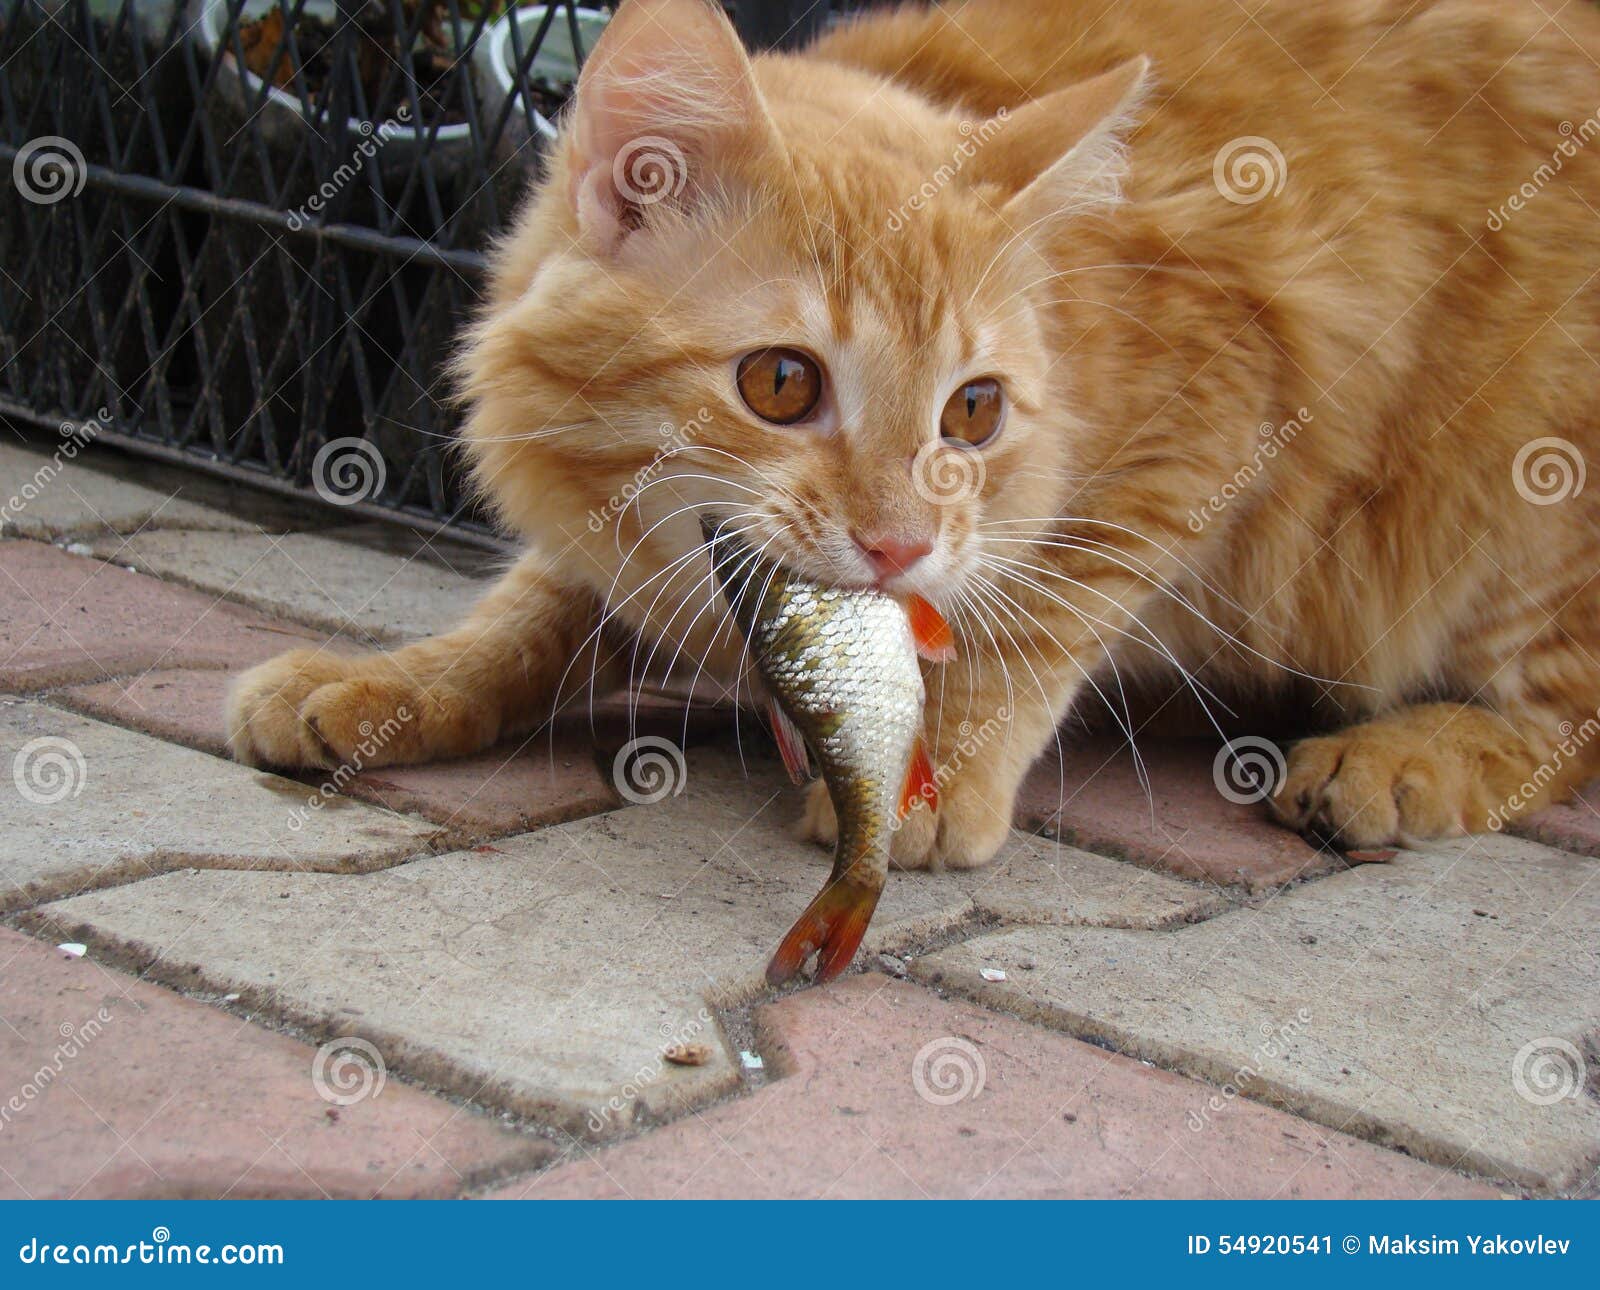 猫吃鱼 - 猫, 动物, 鱼 - ananlv - 图虫摄影网